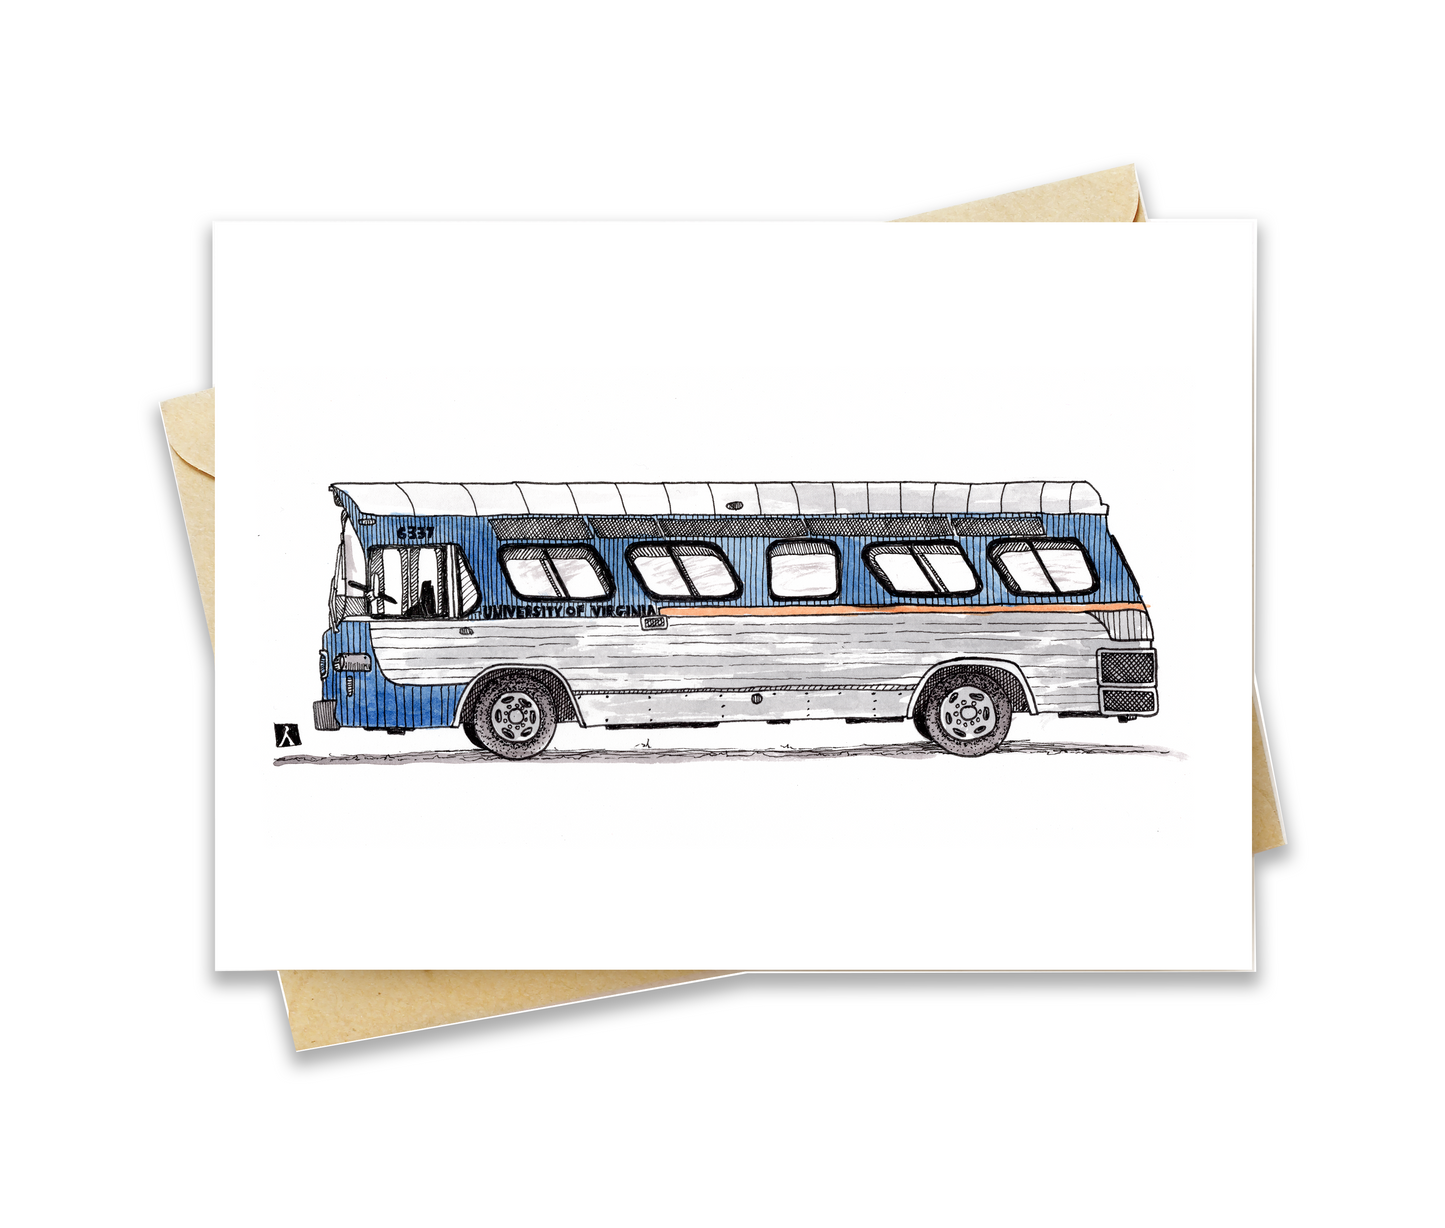 BellavanceInk: Greeting Card With Pen & Ink Sketch Of Vintage UVA Bus (UNOFFICIAL) in Charlottesville, Virginia